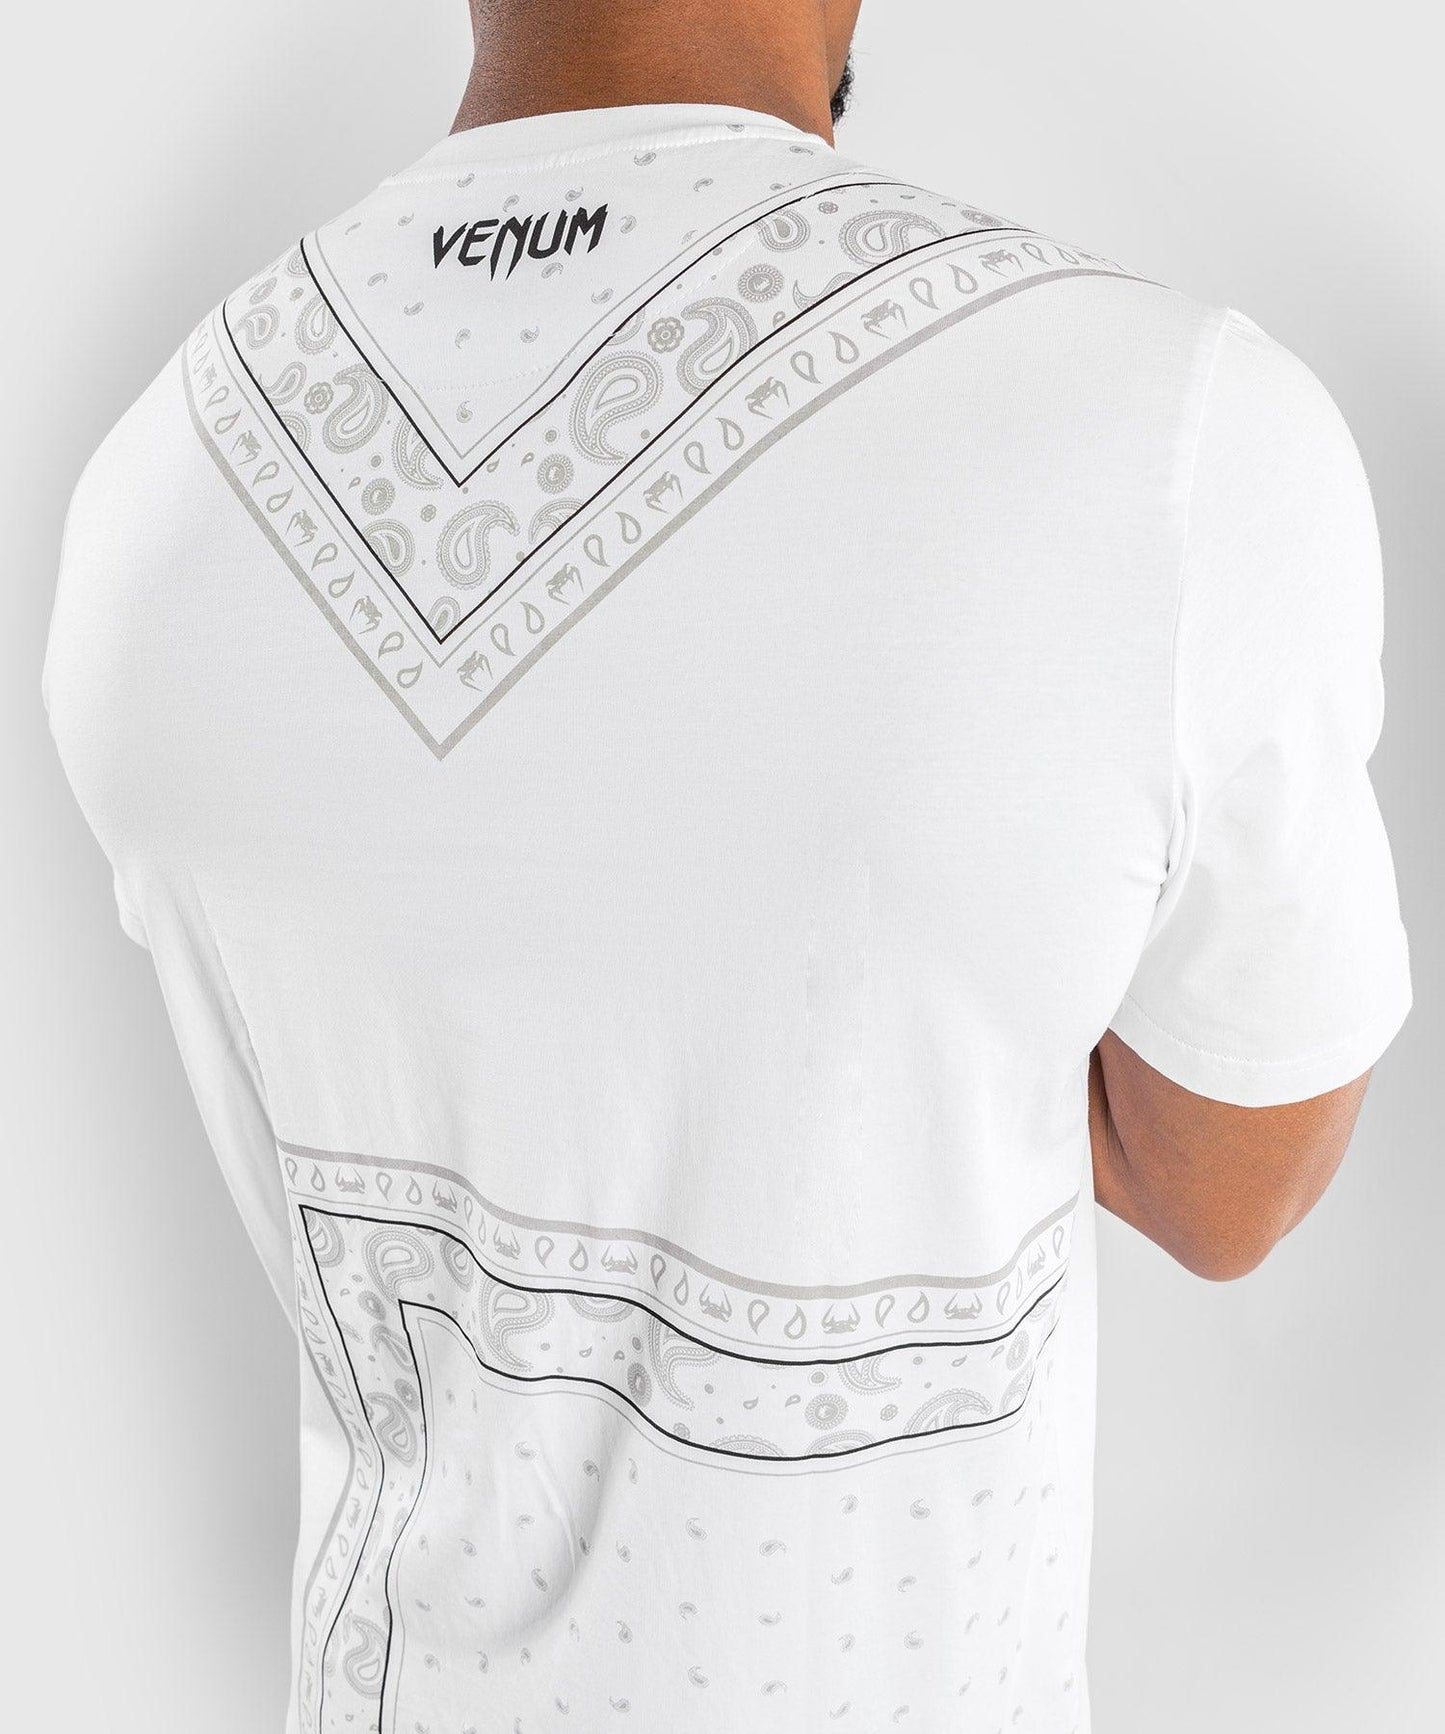 Venum Cali 34 T-Shirt - Regular fit - White